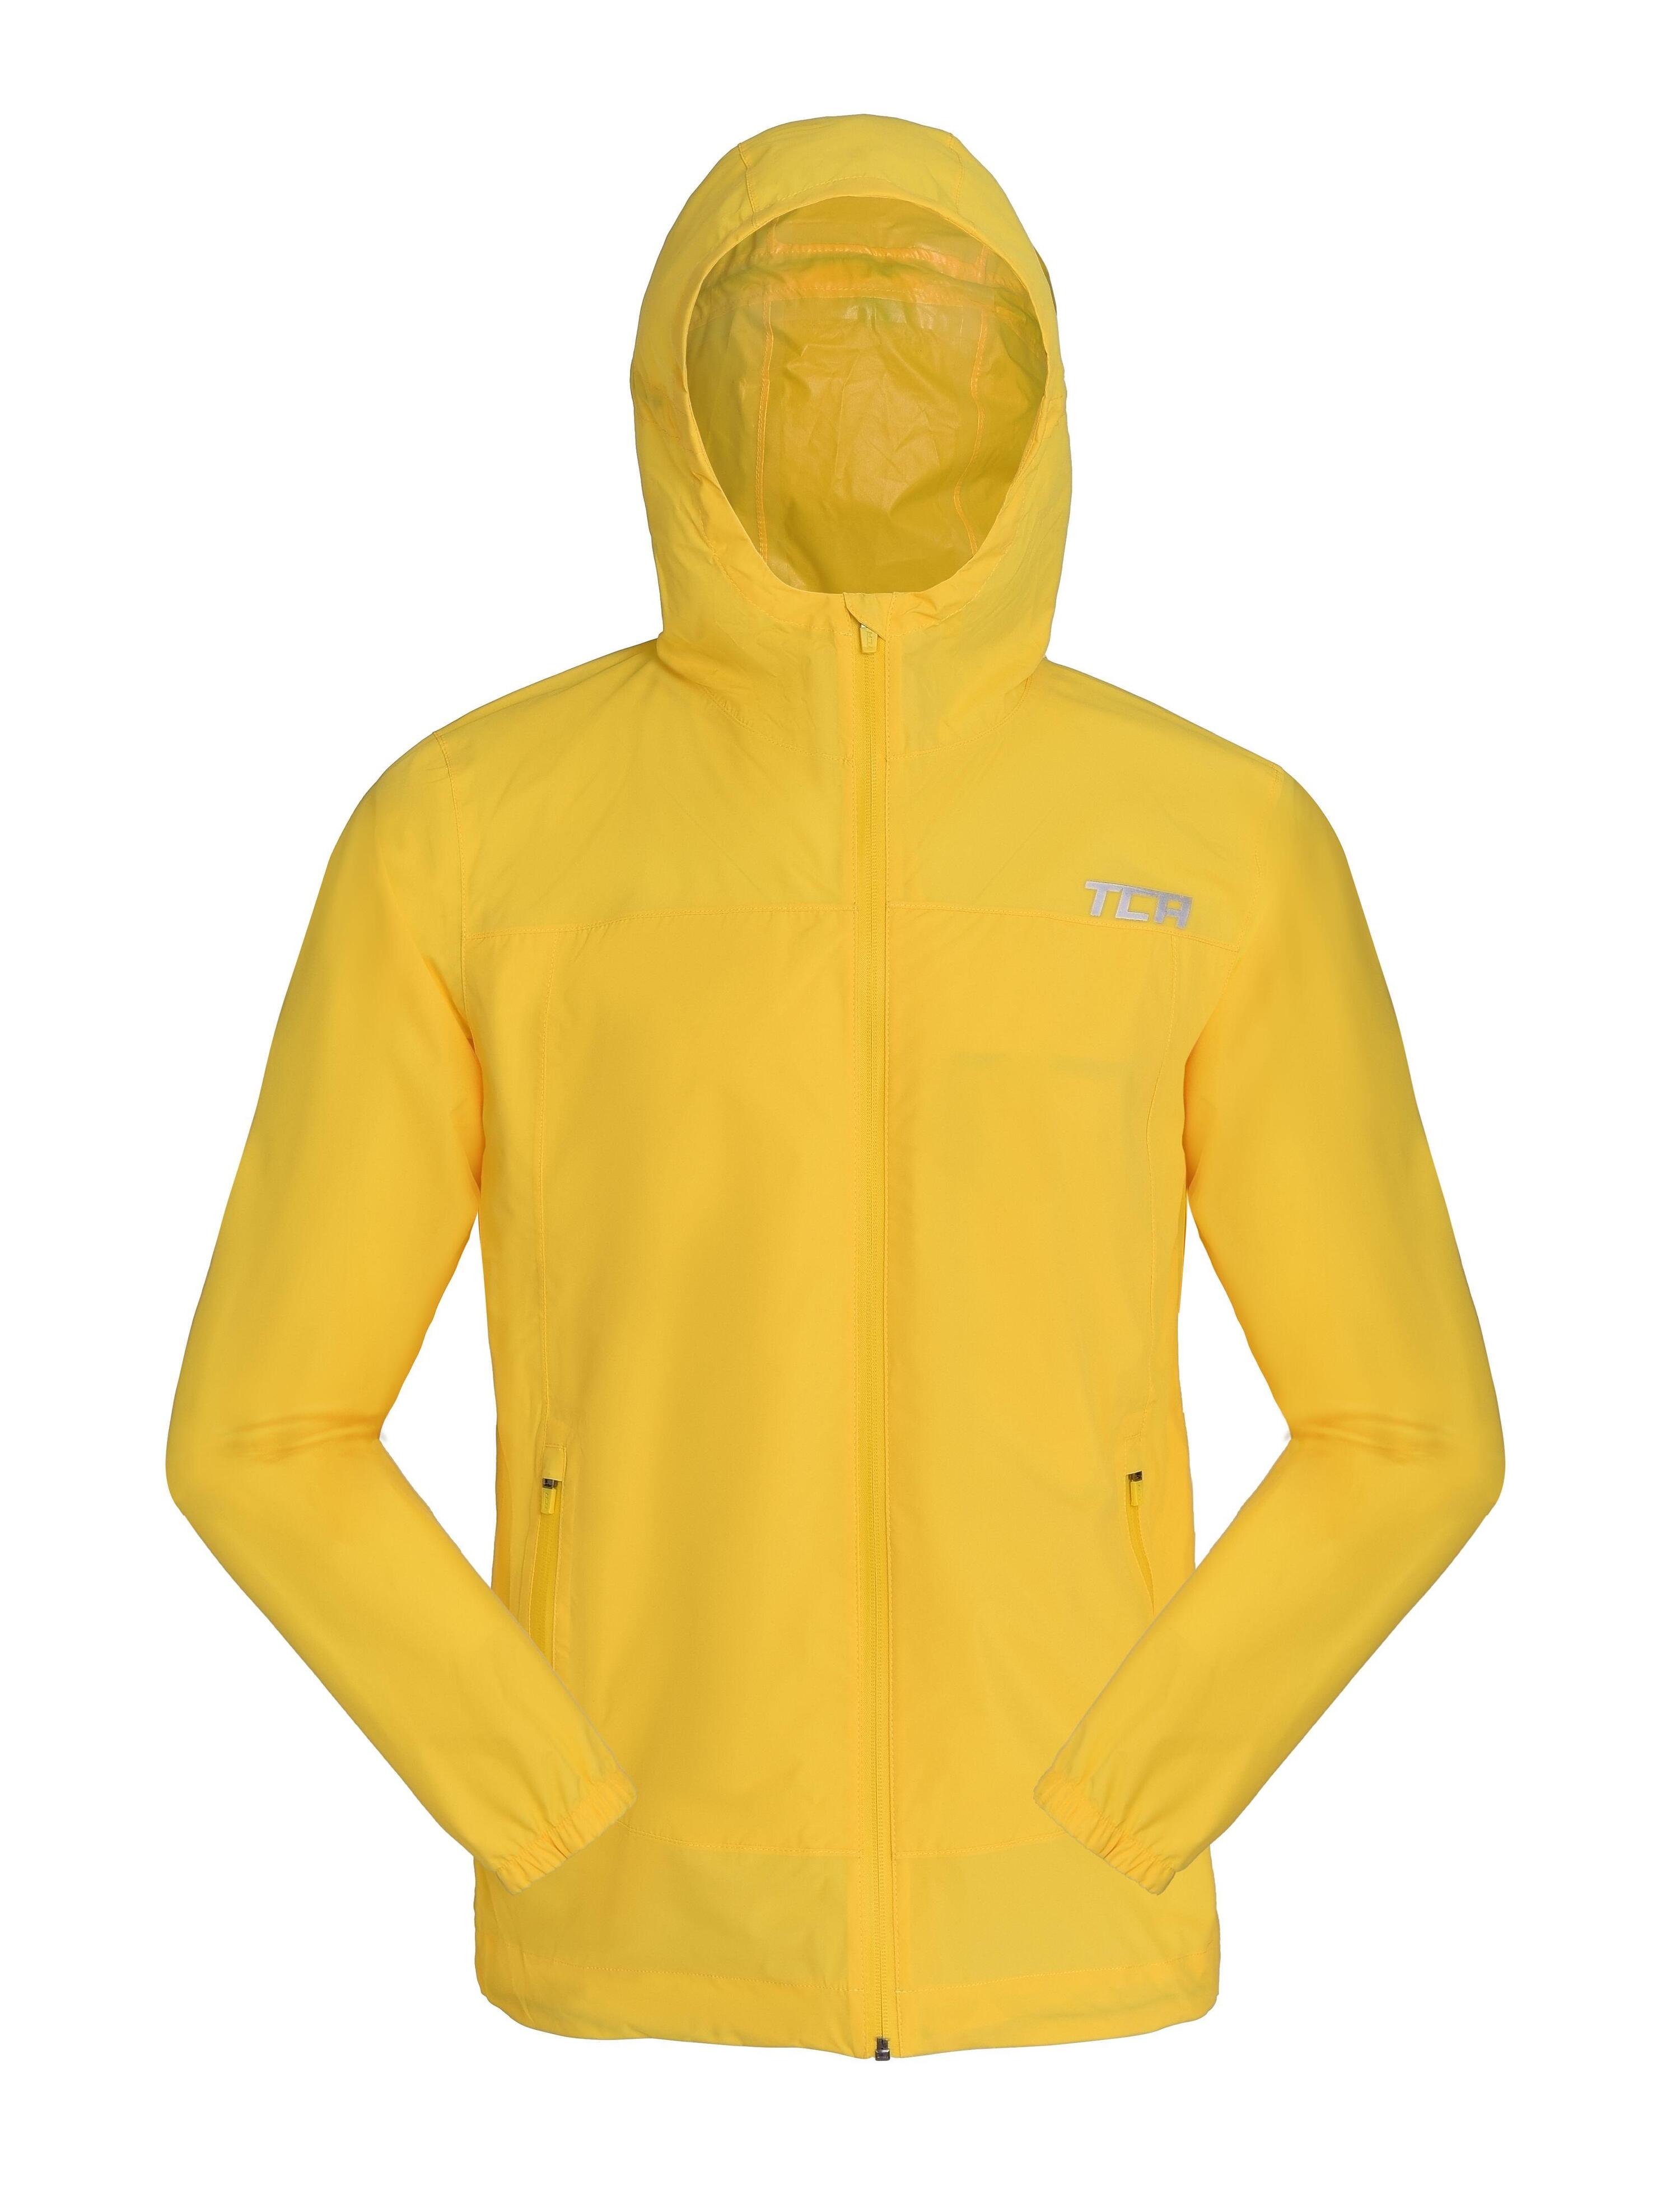 TCA Boys' AirLite Rain Jacket with Zip Pockets - Vibrant Yellow